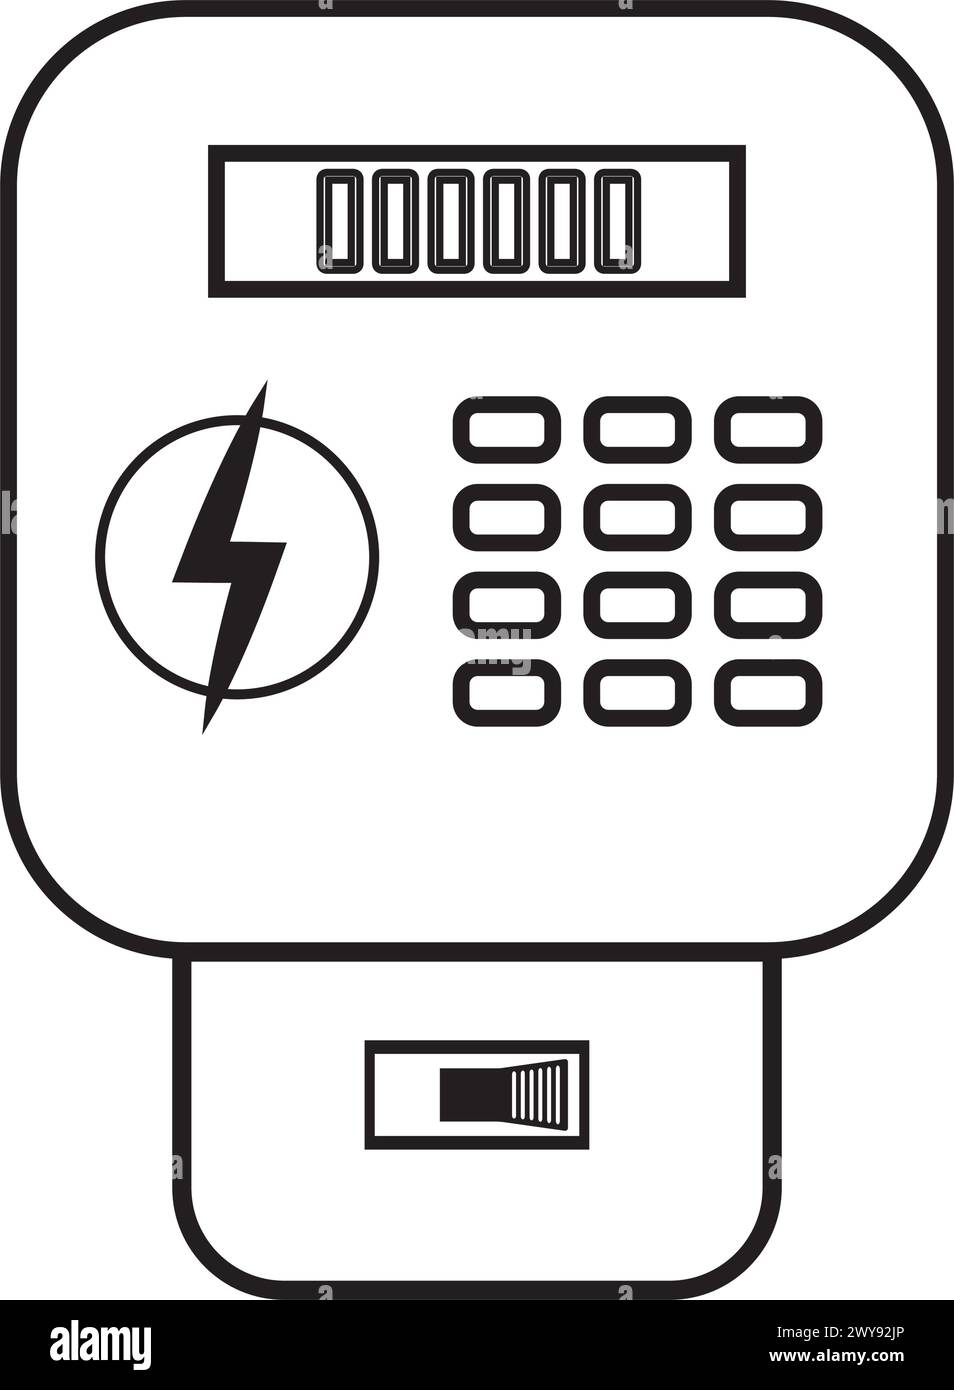 Electricity meter icon vector illustration symbol design Stock Vector